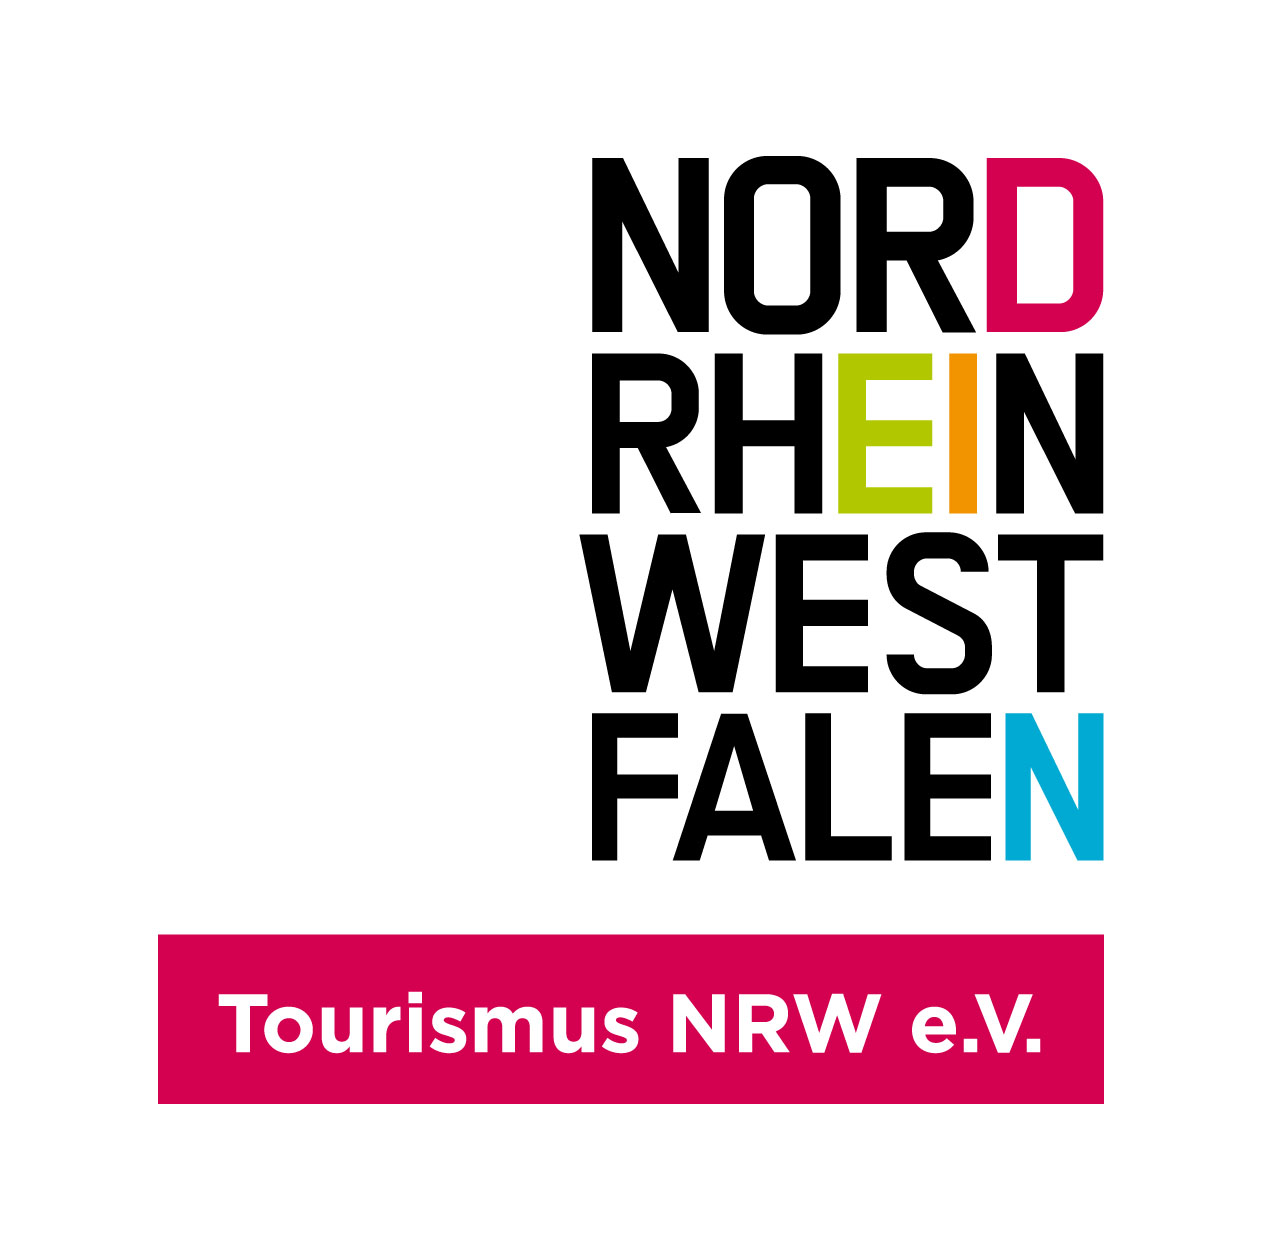 (c)Tourismus NRW